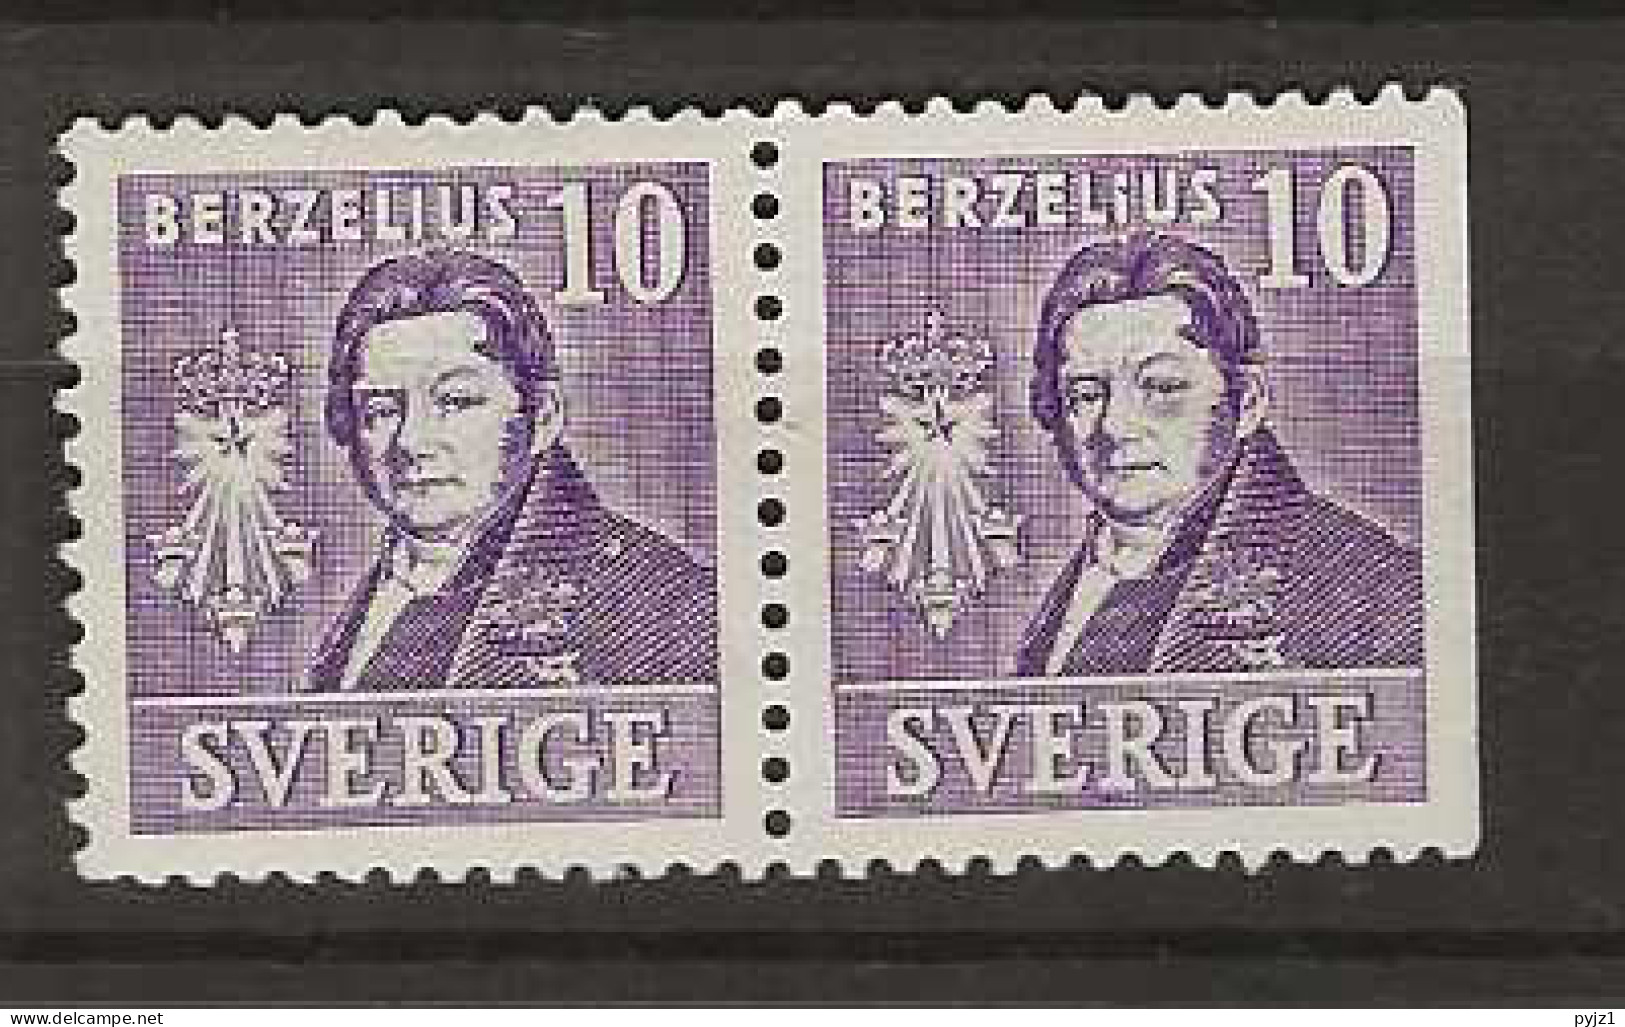 1939 MNH Sweden Mi 272BD Postfris** - Nuevos